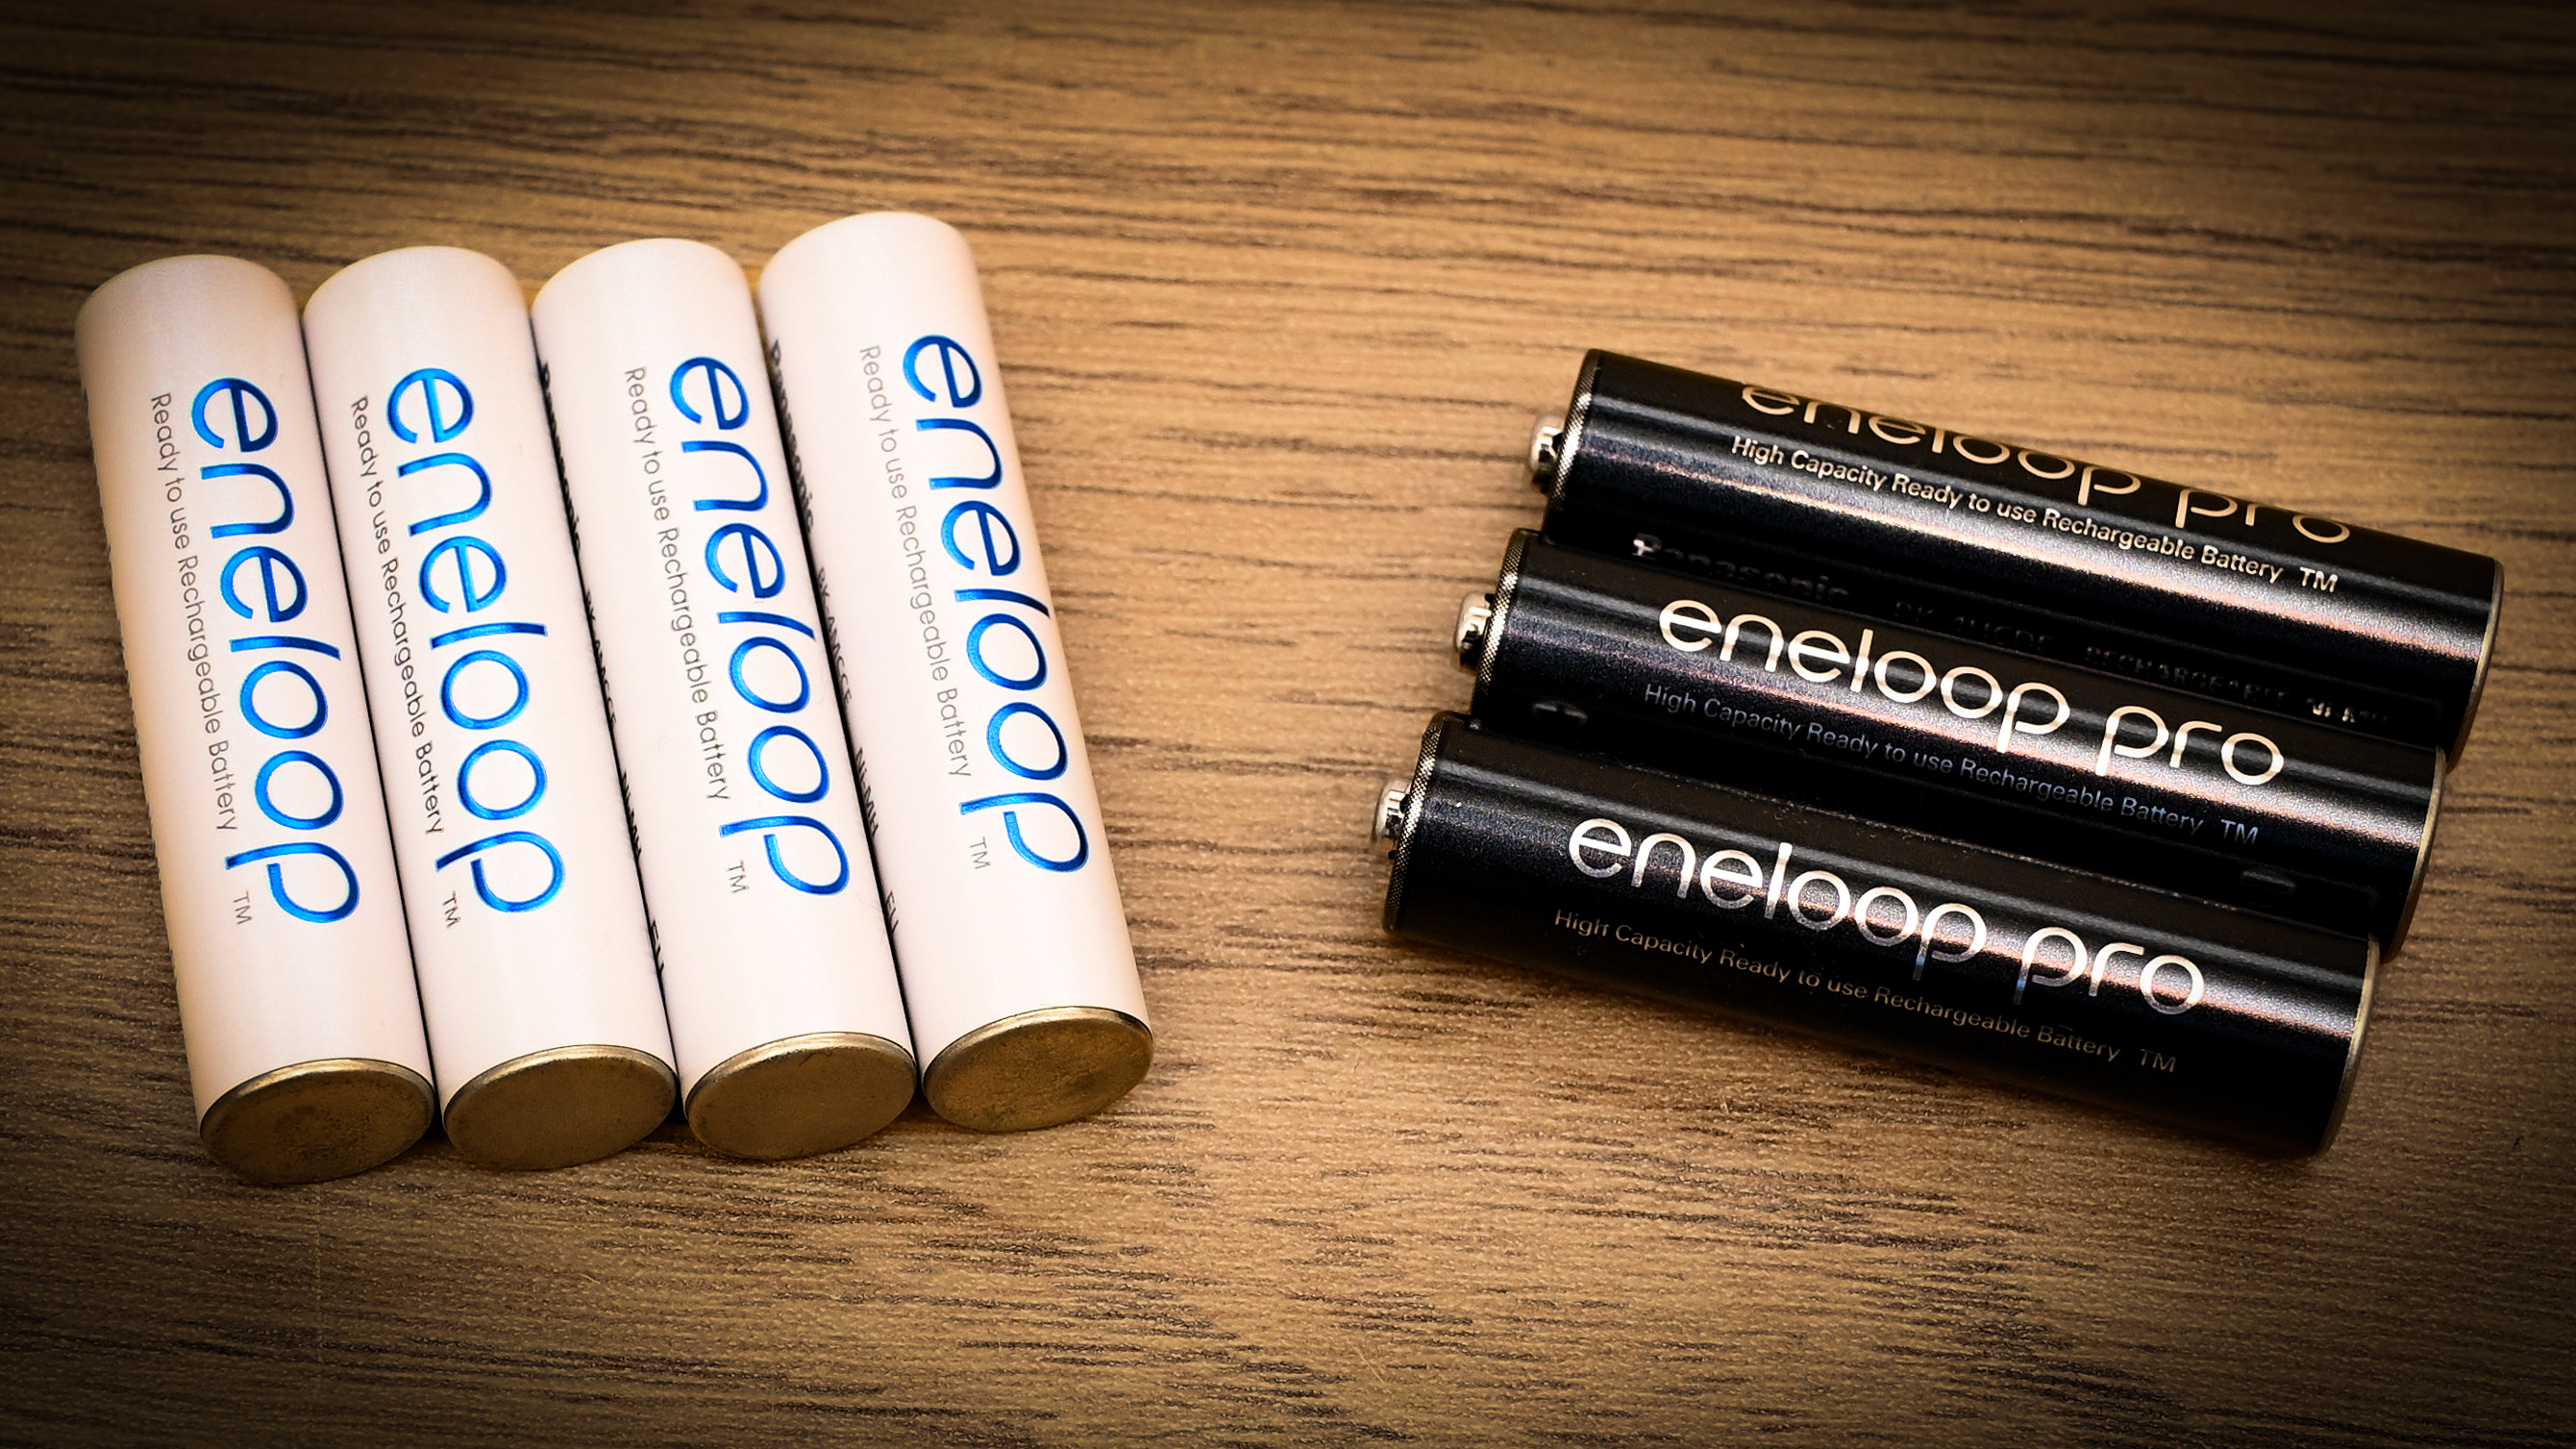 Panasonic Eneloop AAA Batteries (16x) – Batteries Guy